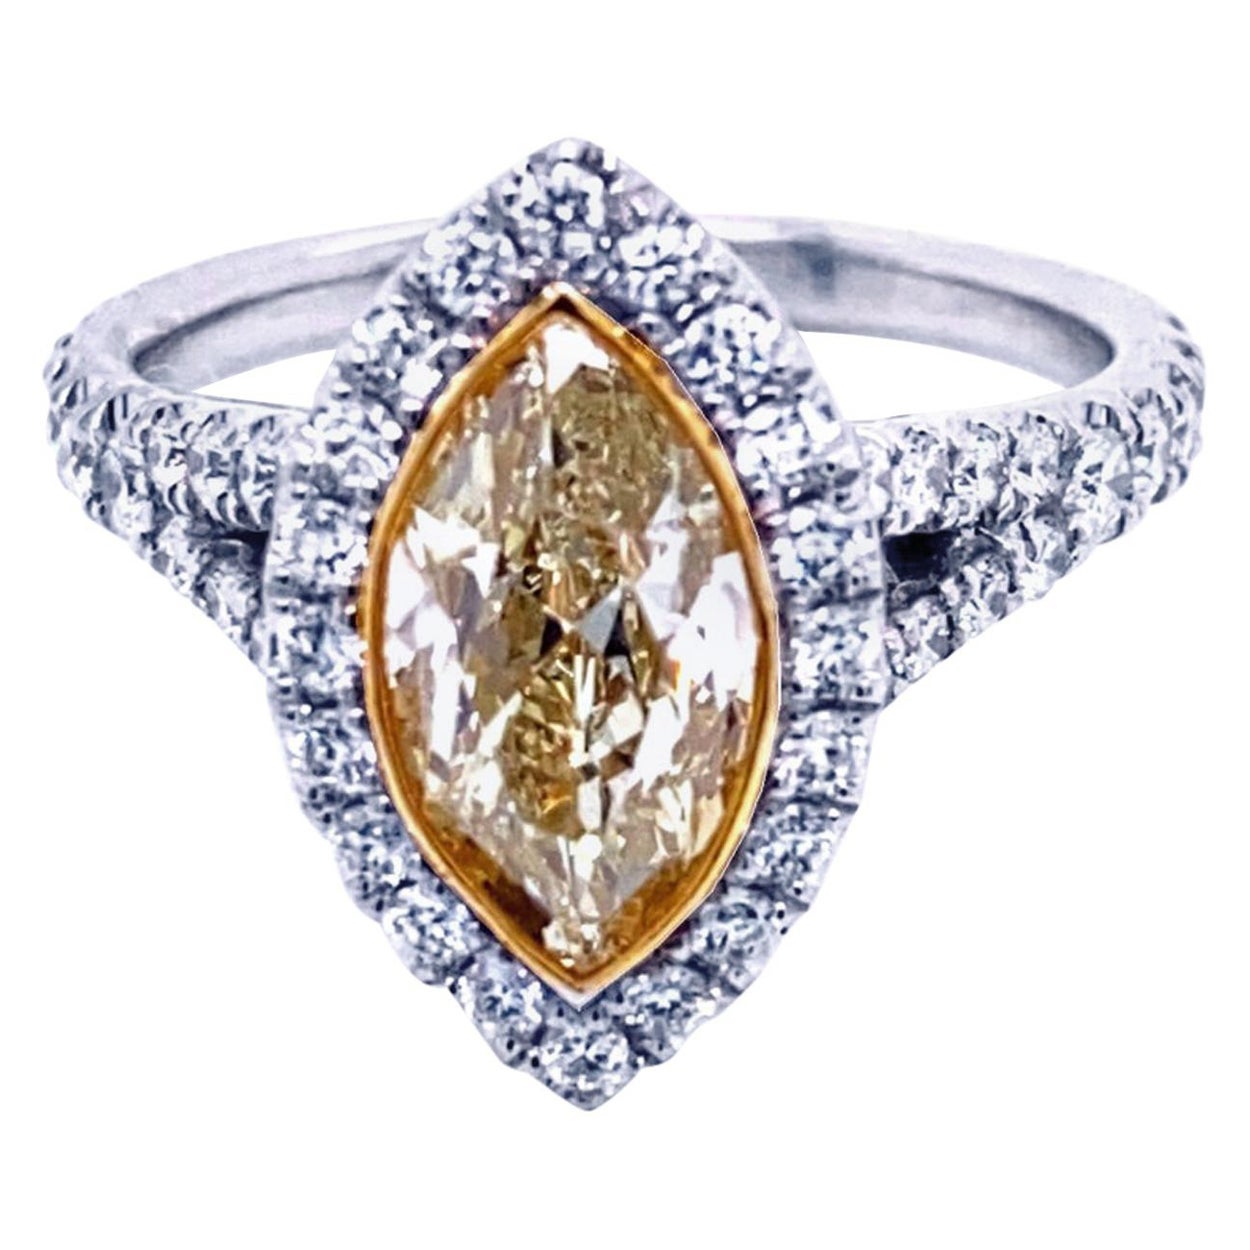 1.5 Carat Yellow MQ Diamond in Pave Set 18 Karat Split Shank Ring with Halo For Sale